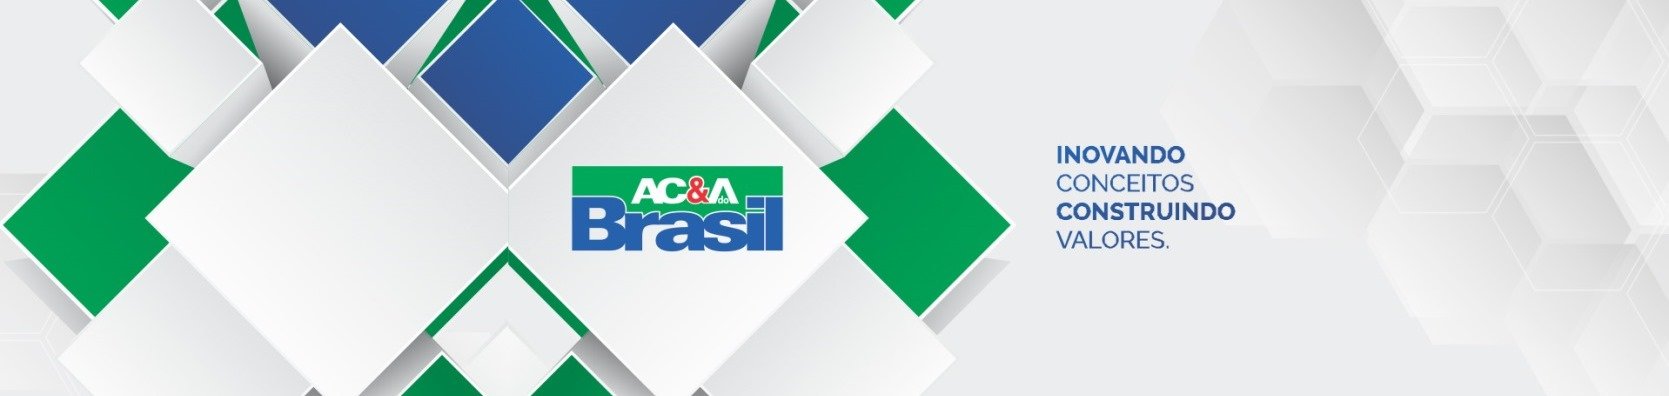 AC&A DO BRASIL